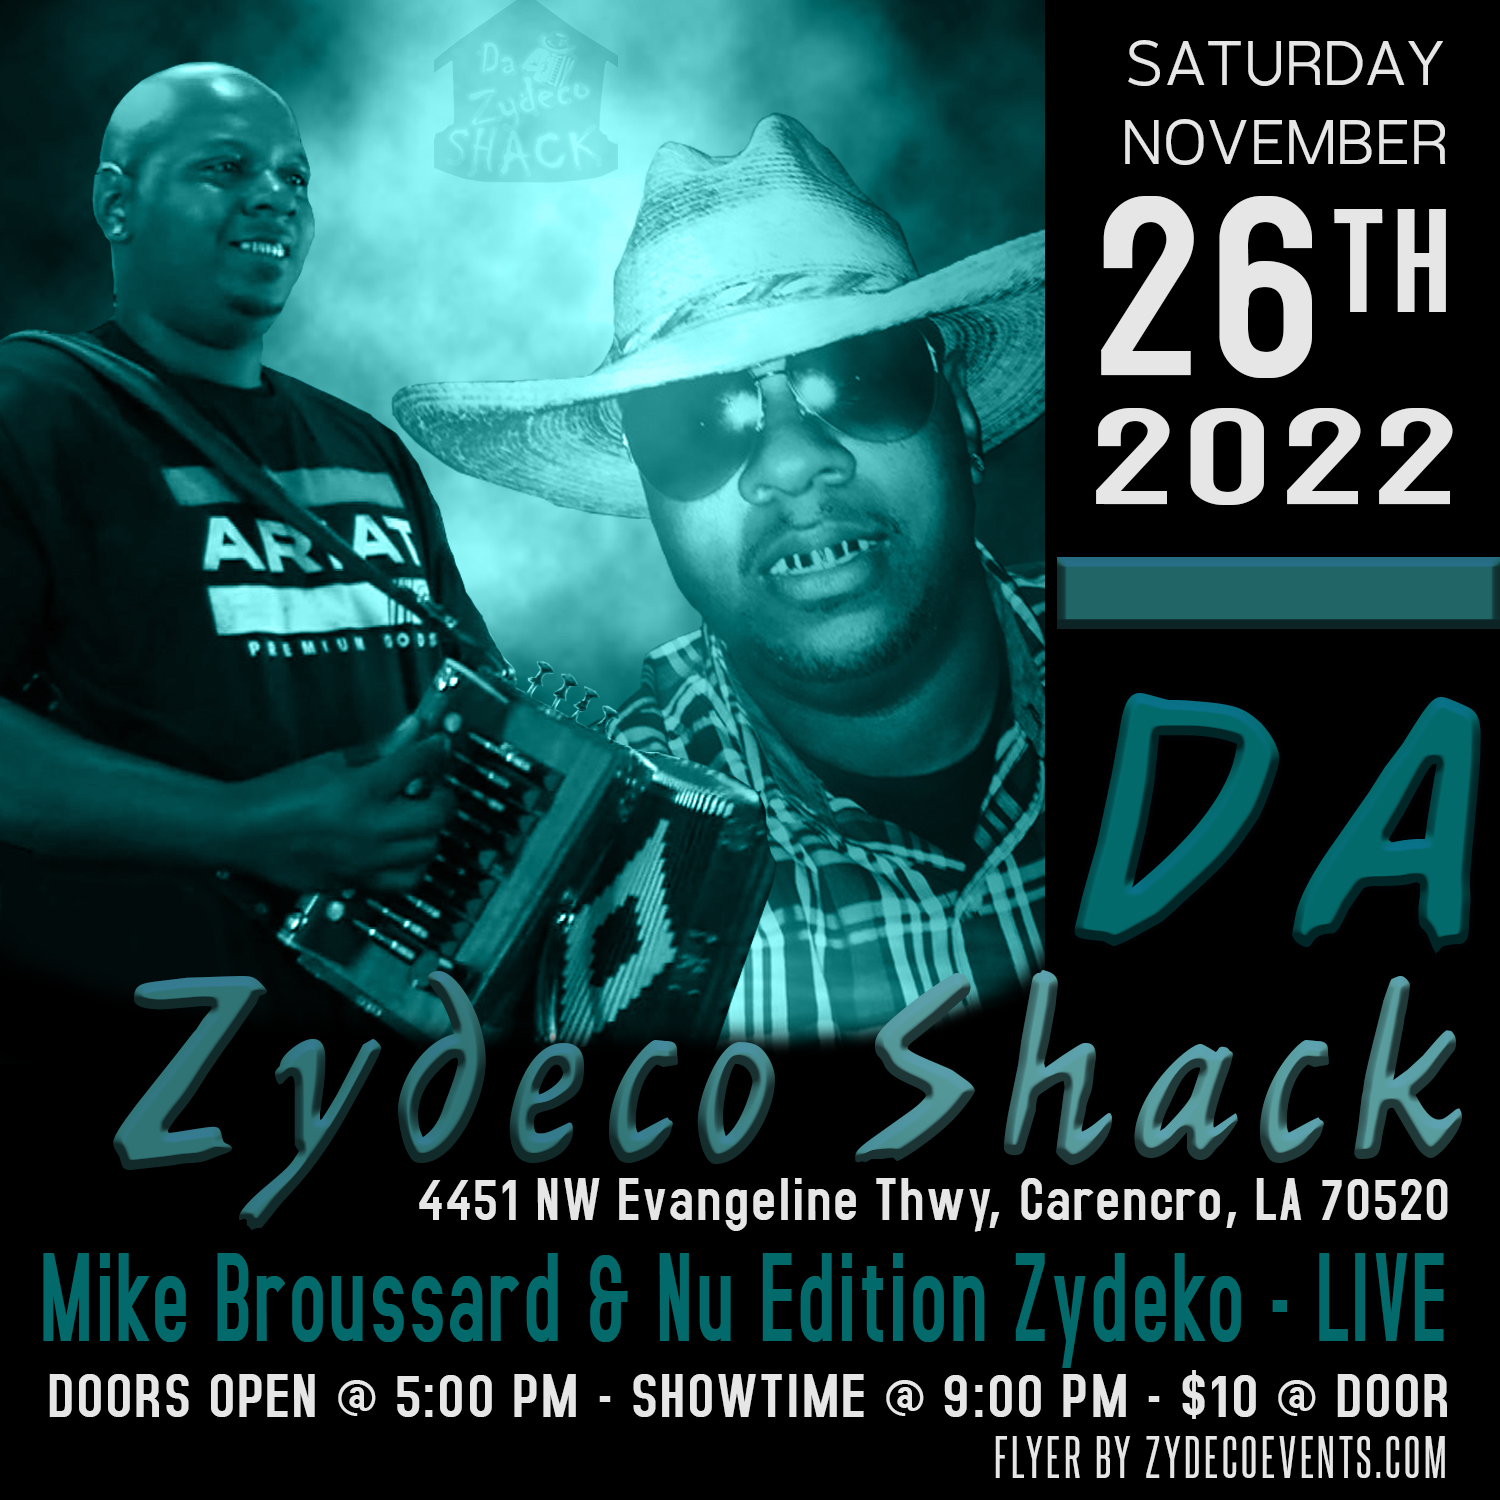 Mike Broussard & Nu Edition Zydeko - LIVE @ Da Zydeco Shack